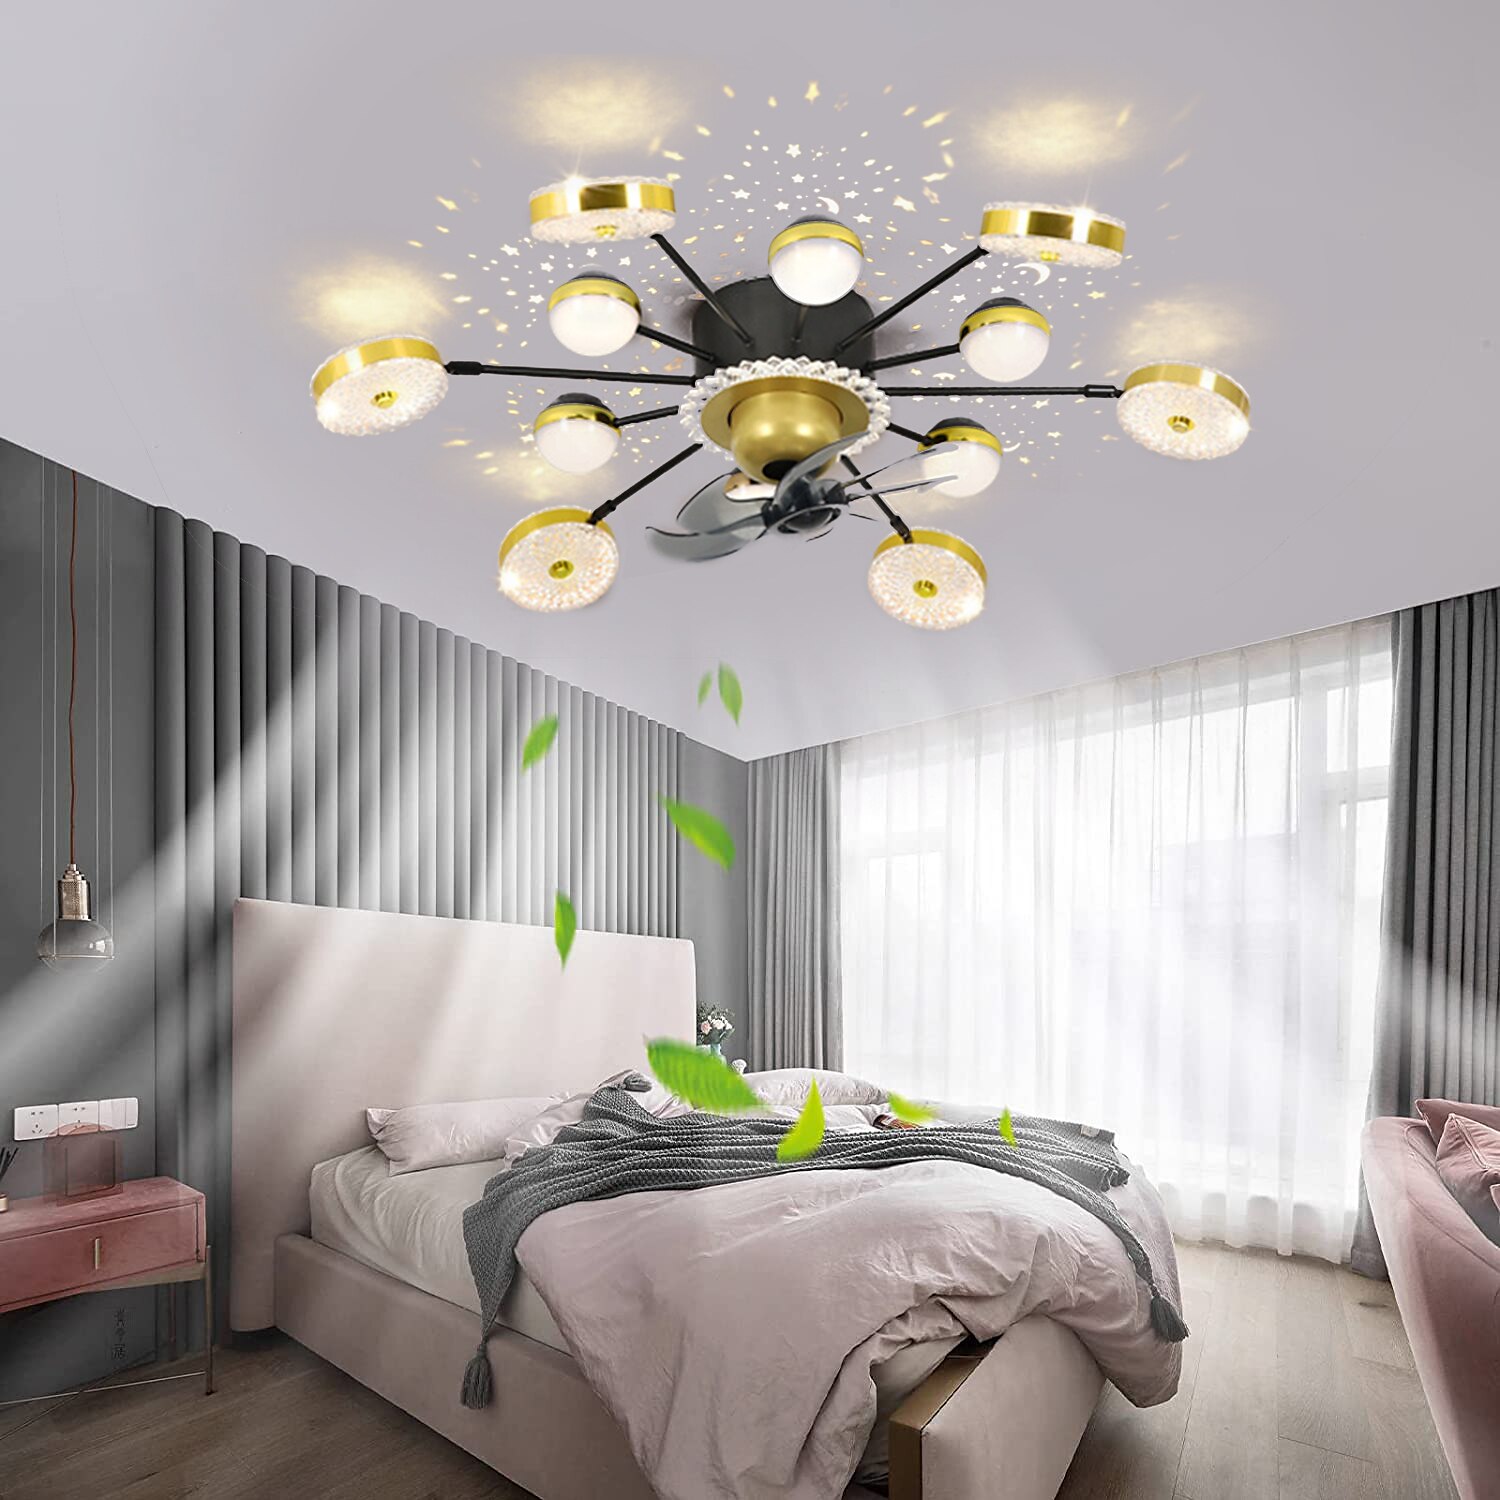 Ceiling Fan with Light App & Remote Control 102 cm Dimmable 6 Wind Speeds Sputnik Design Projection Modern Ceiling Fan for Bedroom, Living Room, Small Room 110-240V